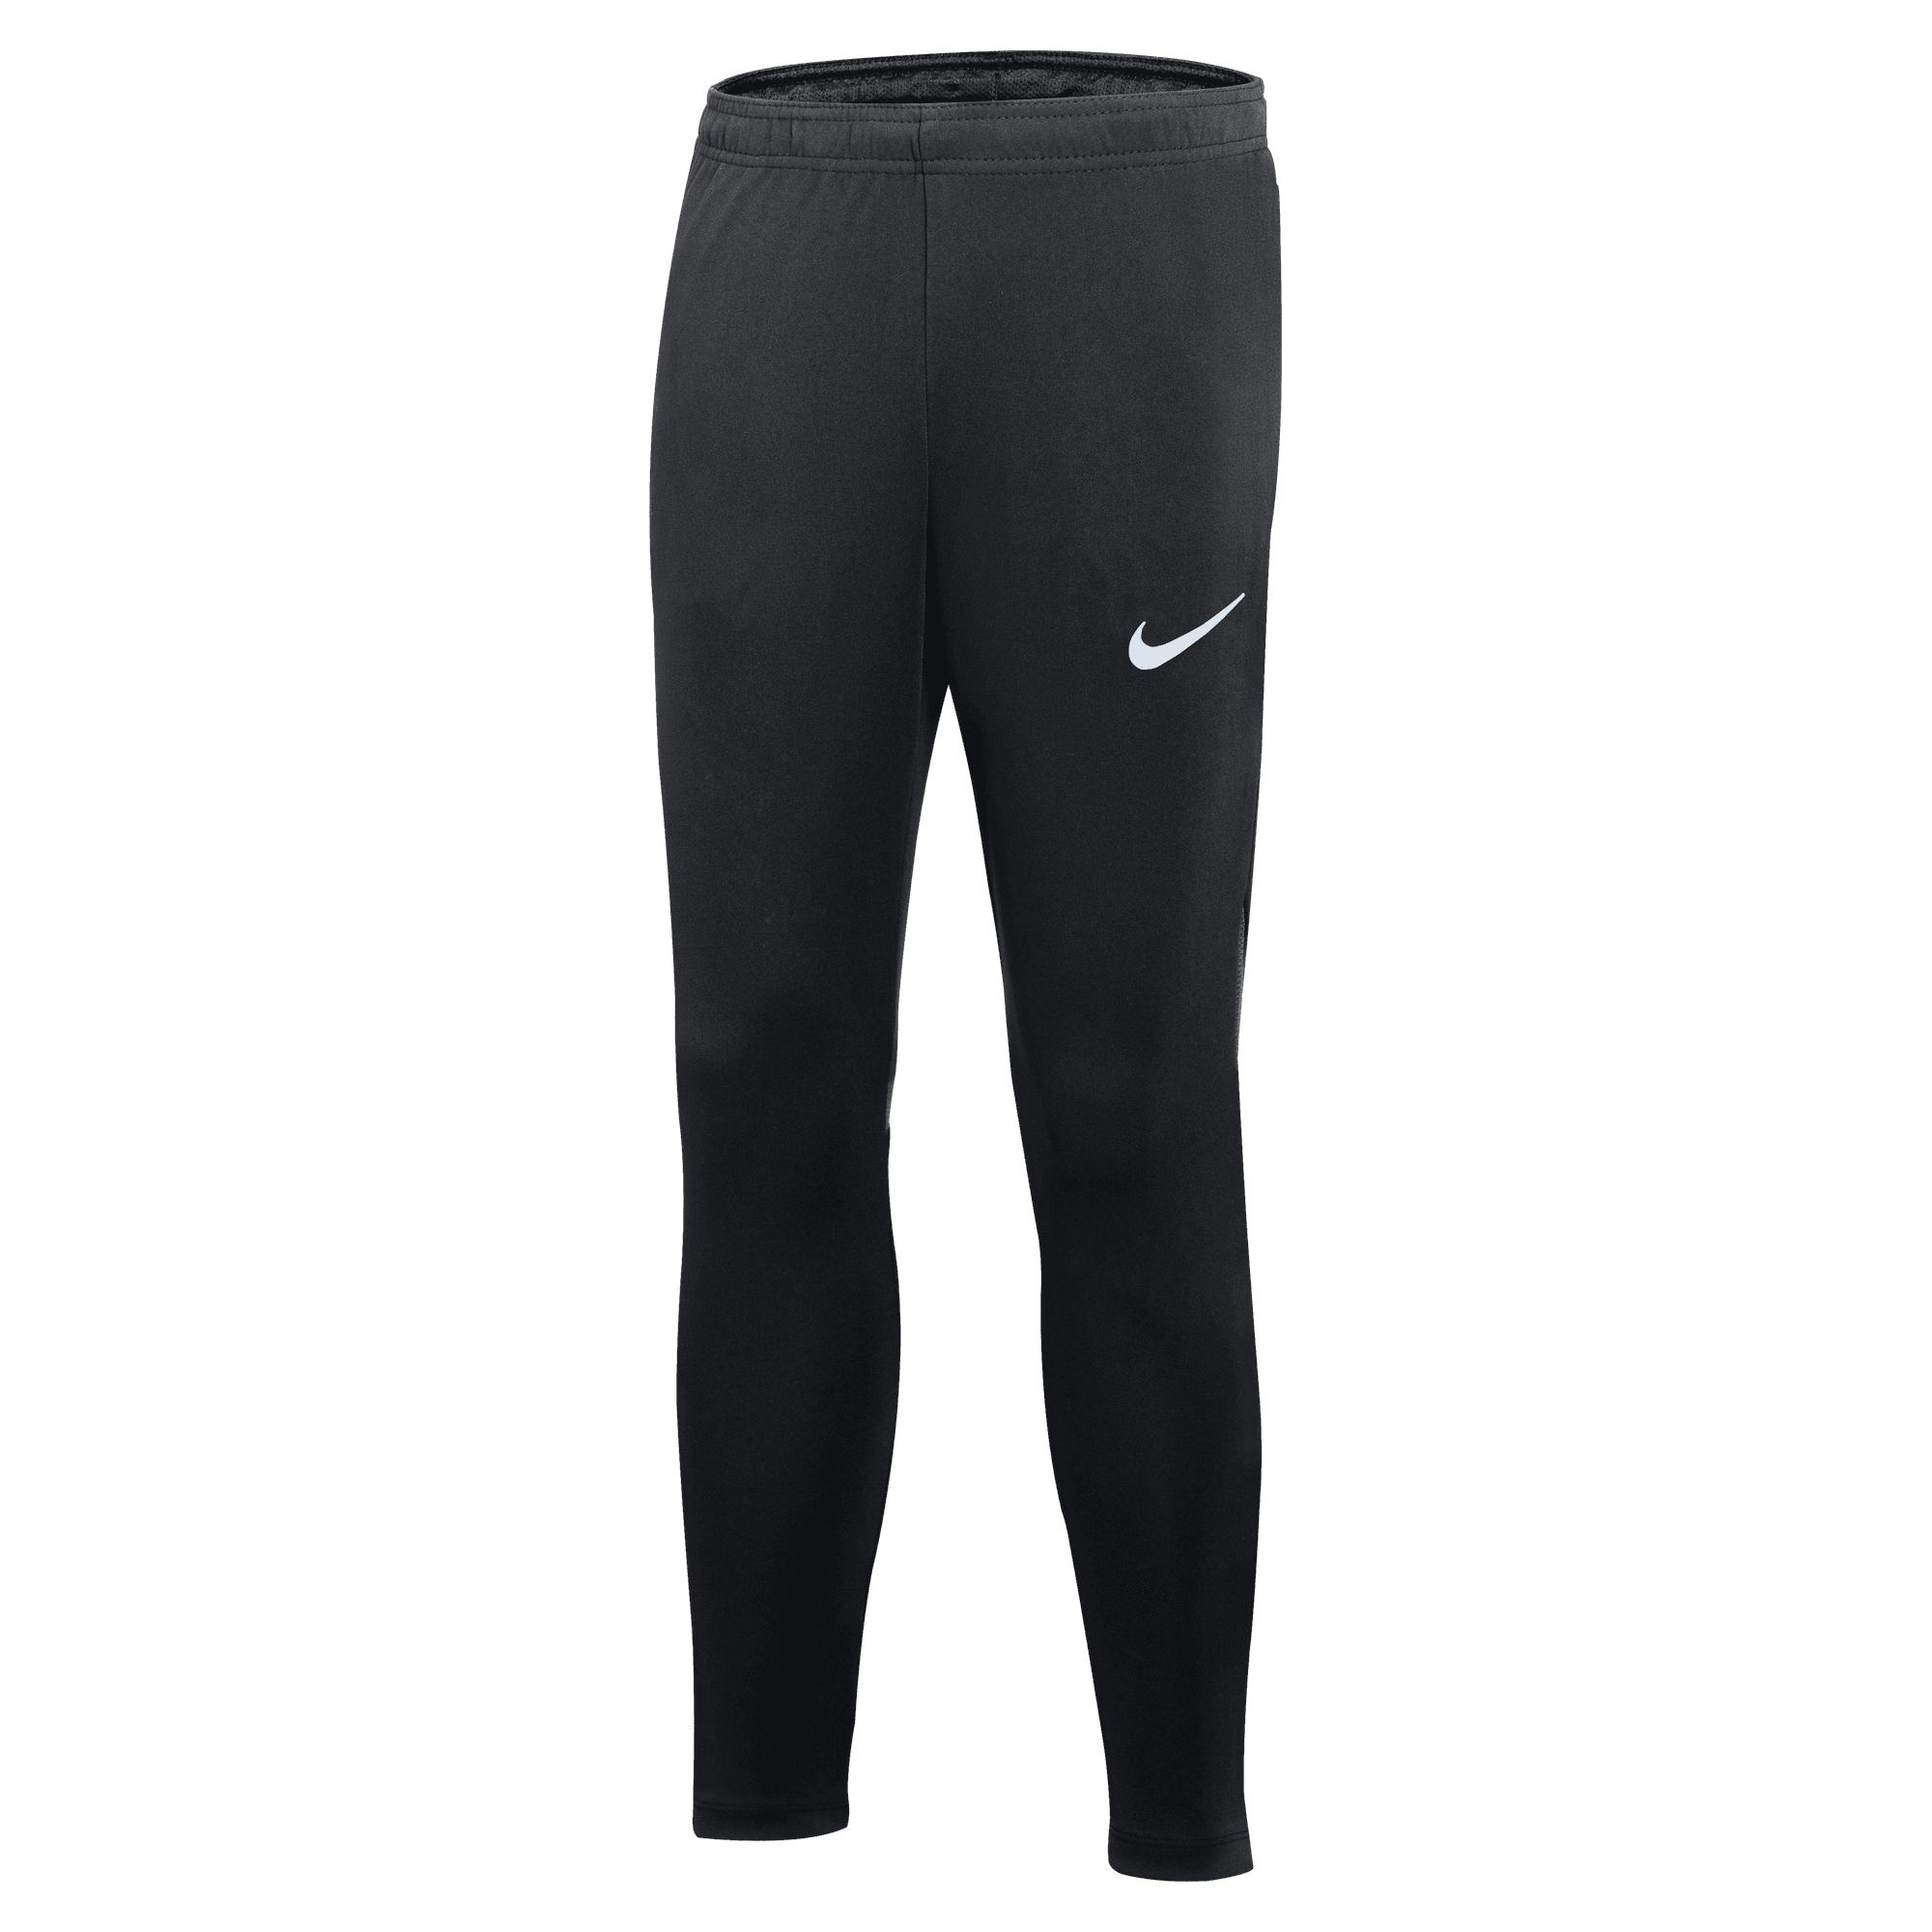 Nike Sportswear FC Barcelona Leg-A-See Women's Tights